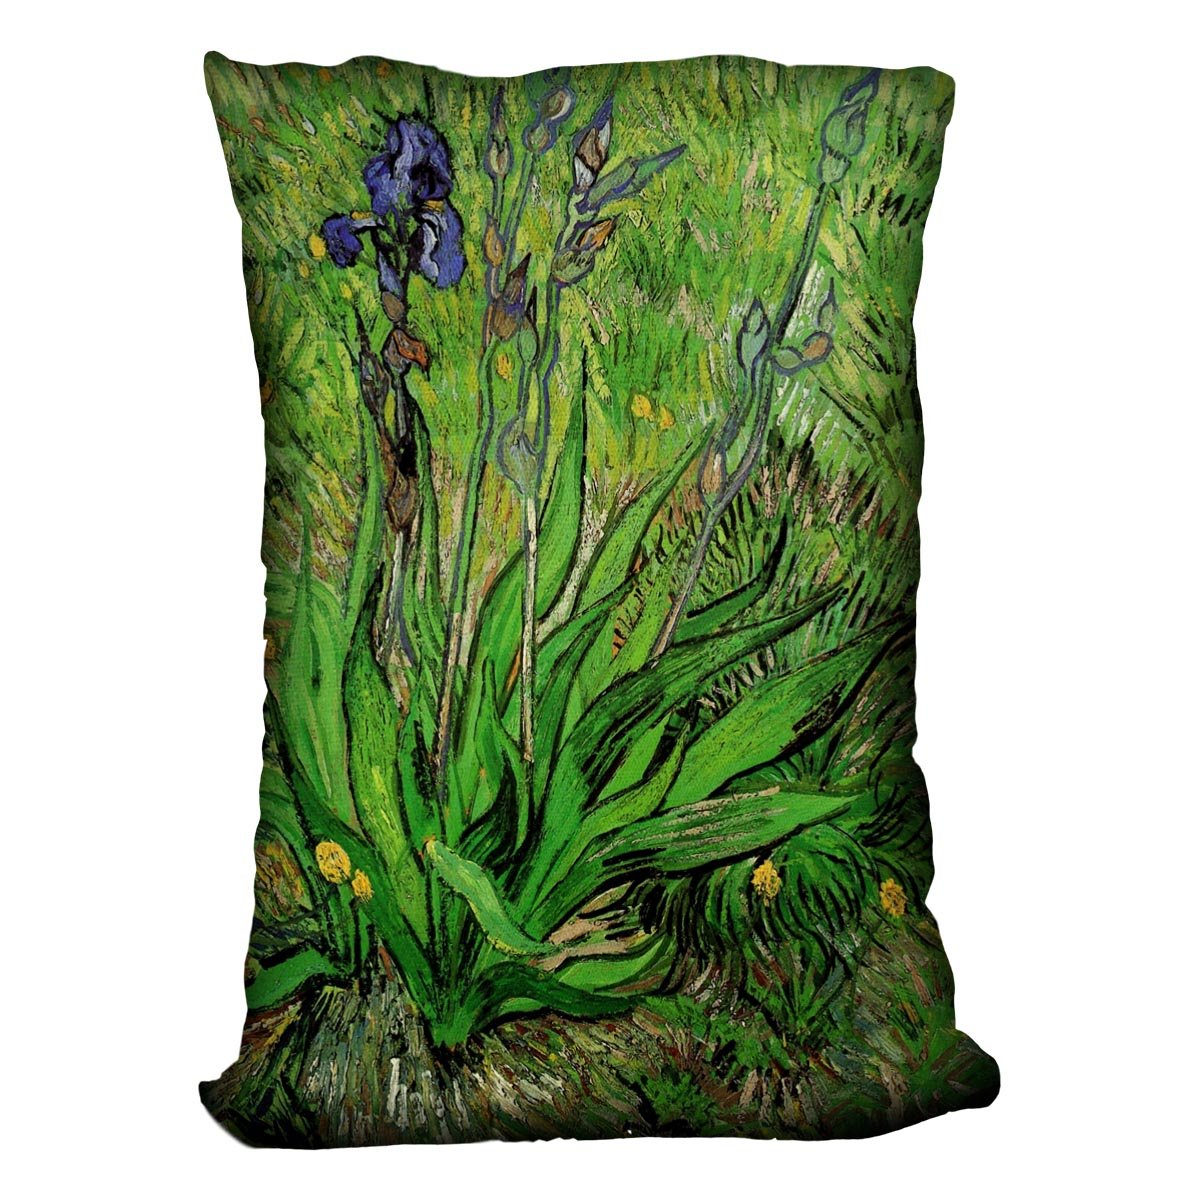 The Iris by Van Gogh Throw Pillow